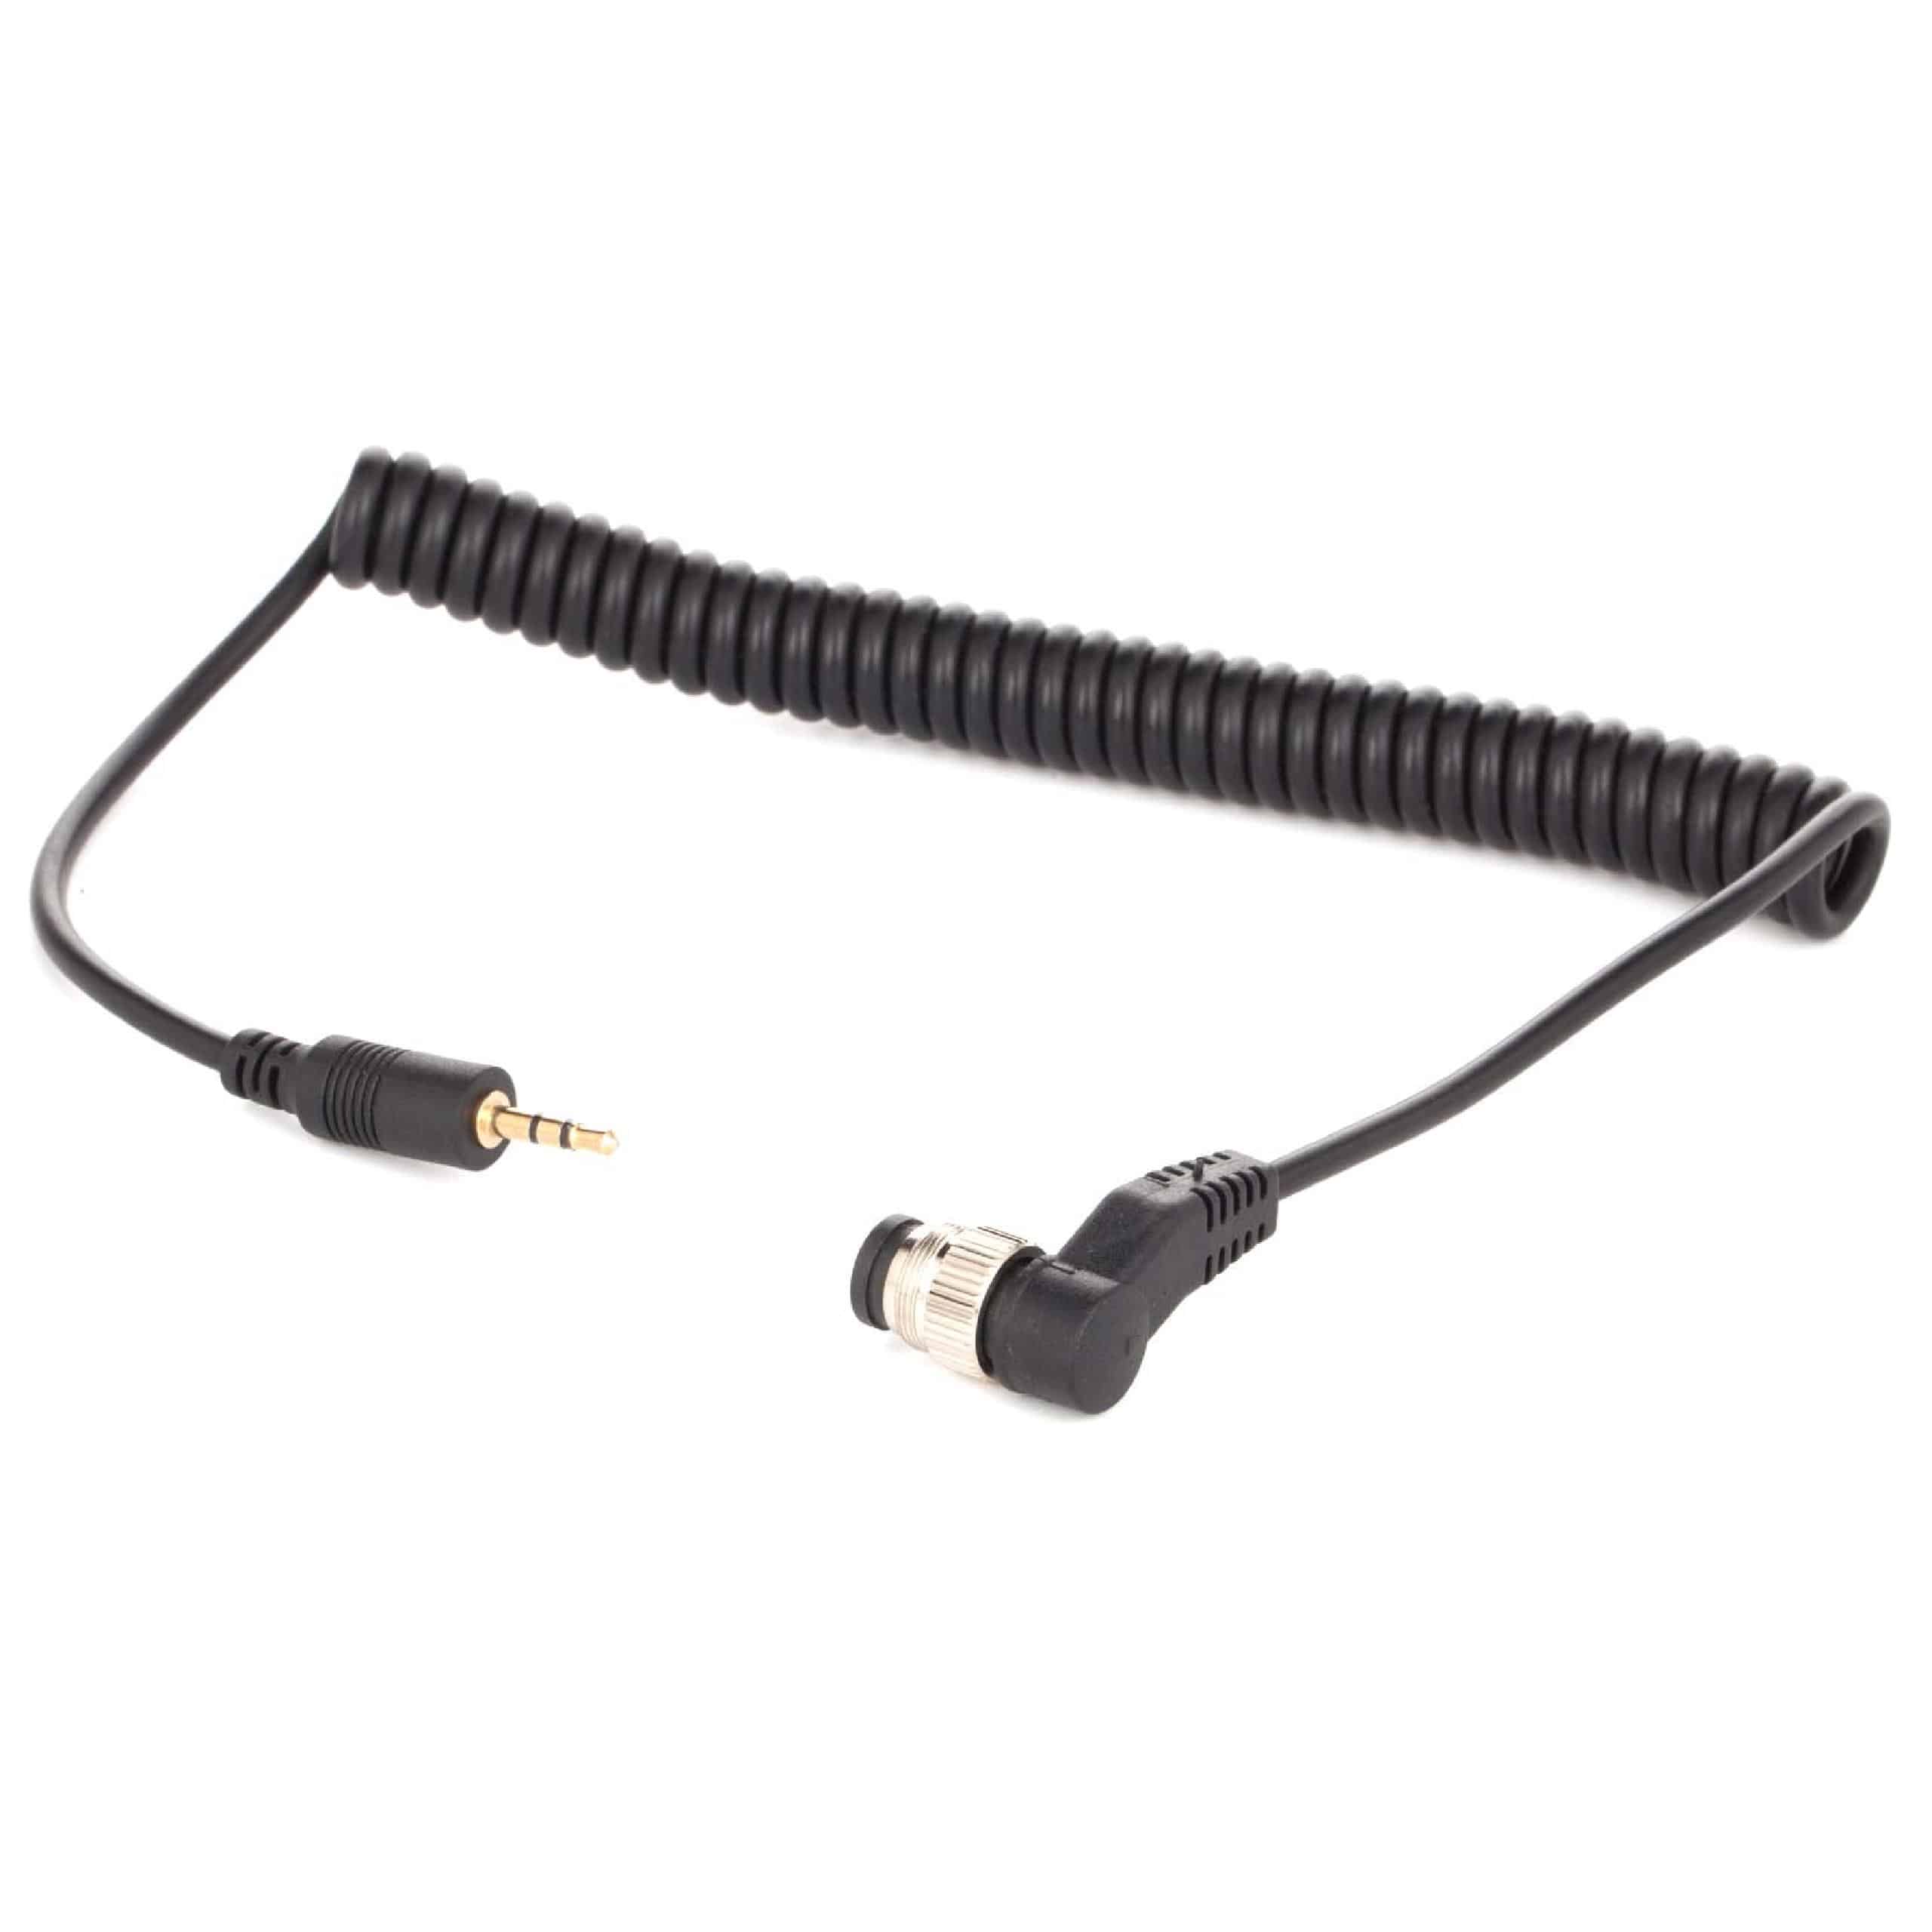 vhbw Cable for Fujifilm / Kodak / Nikon S5 Pro Camera, DSLR - Connecting Cable, 112 cm, Spiral Cord